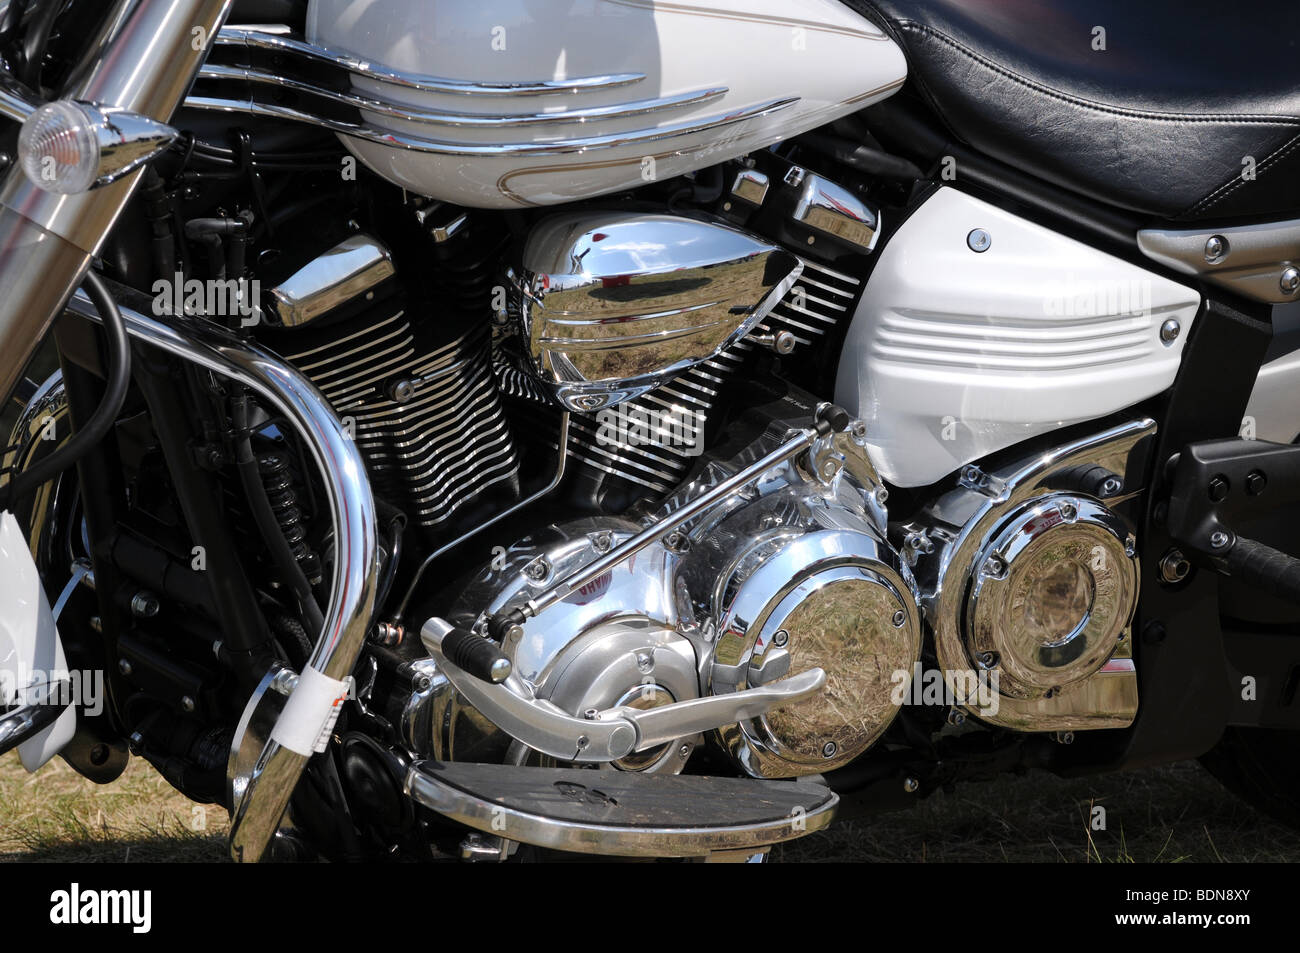 Yamaha XV1900 Midnight Star motorbike Stock Photo - Alamy